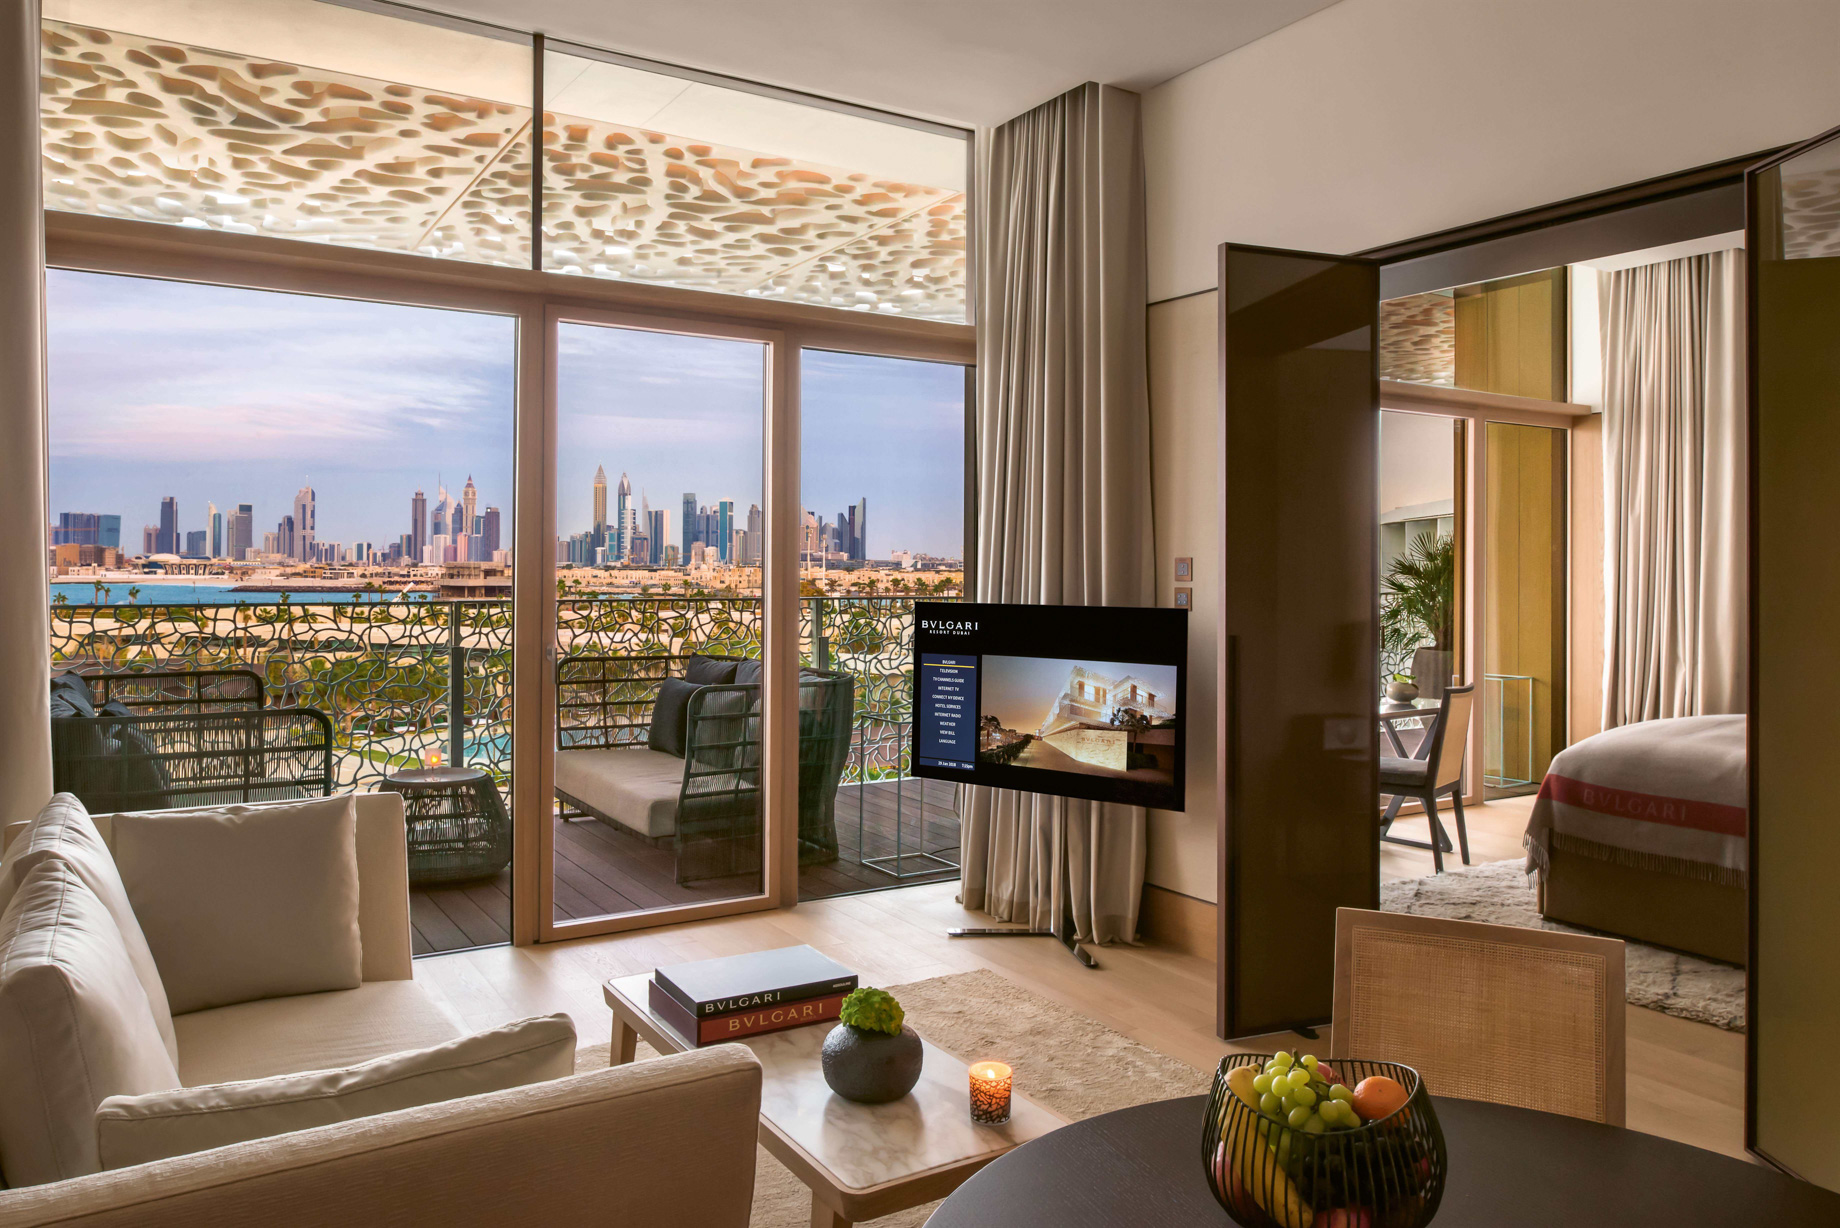 Bvlgari Resort Dubai – Jumeira Bay Island, Dubai, UAE – Guest Suite Living Room and Bedroom City View